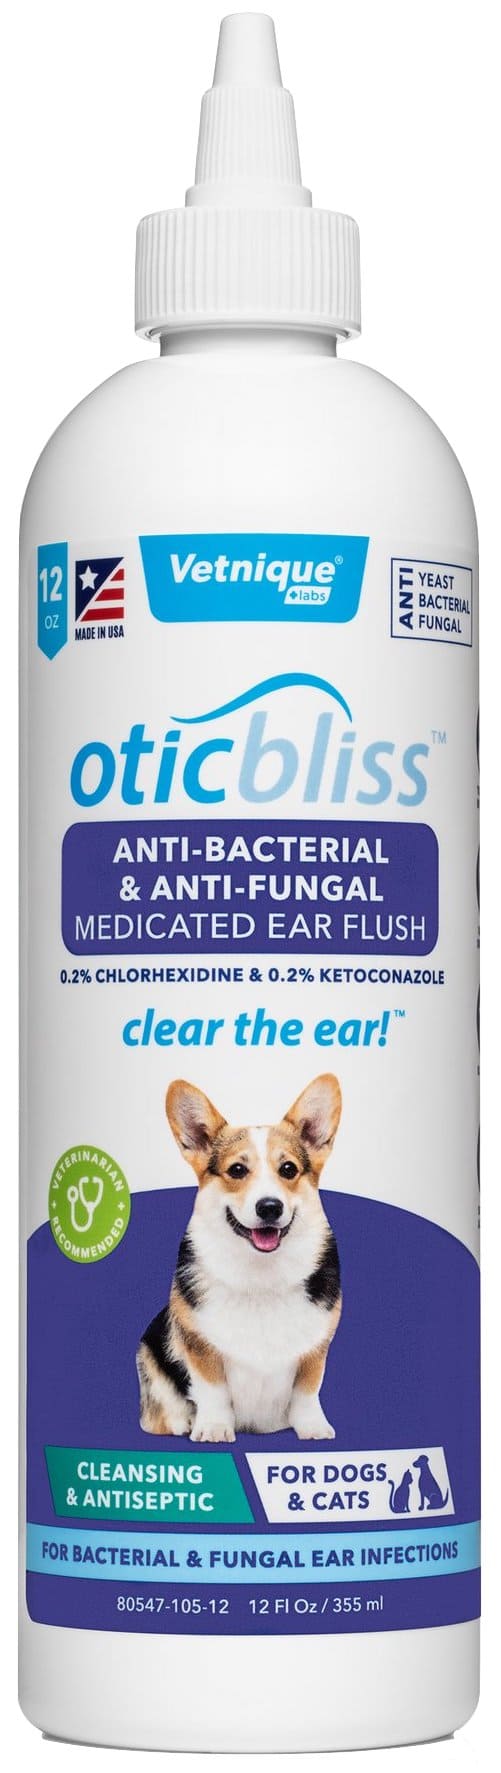 Oticbliss Anti-Bacterial & Anti-Fungal Medicated Ear Flush